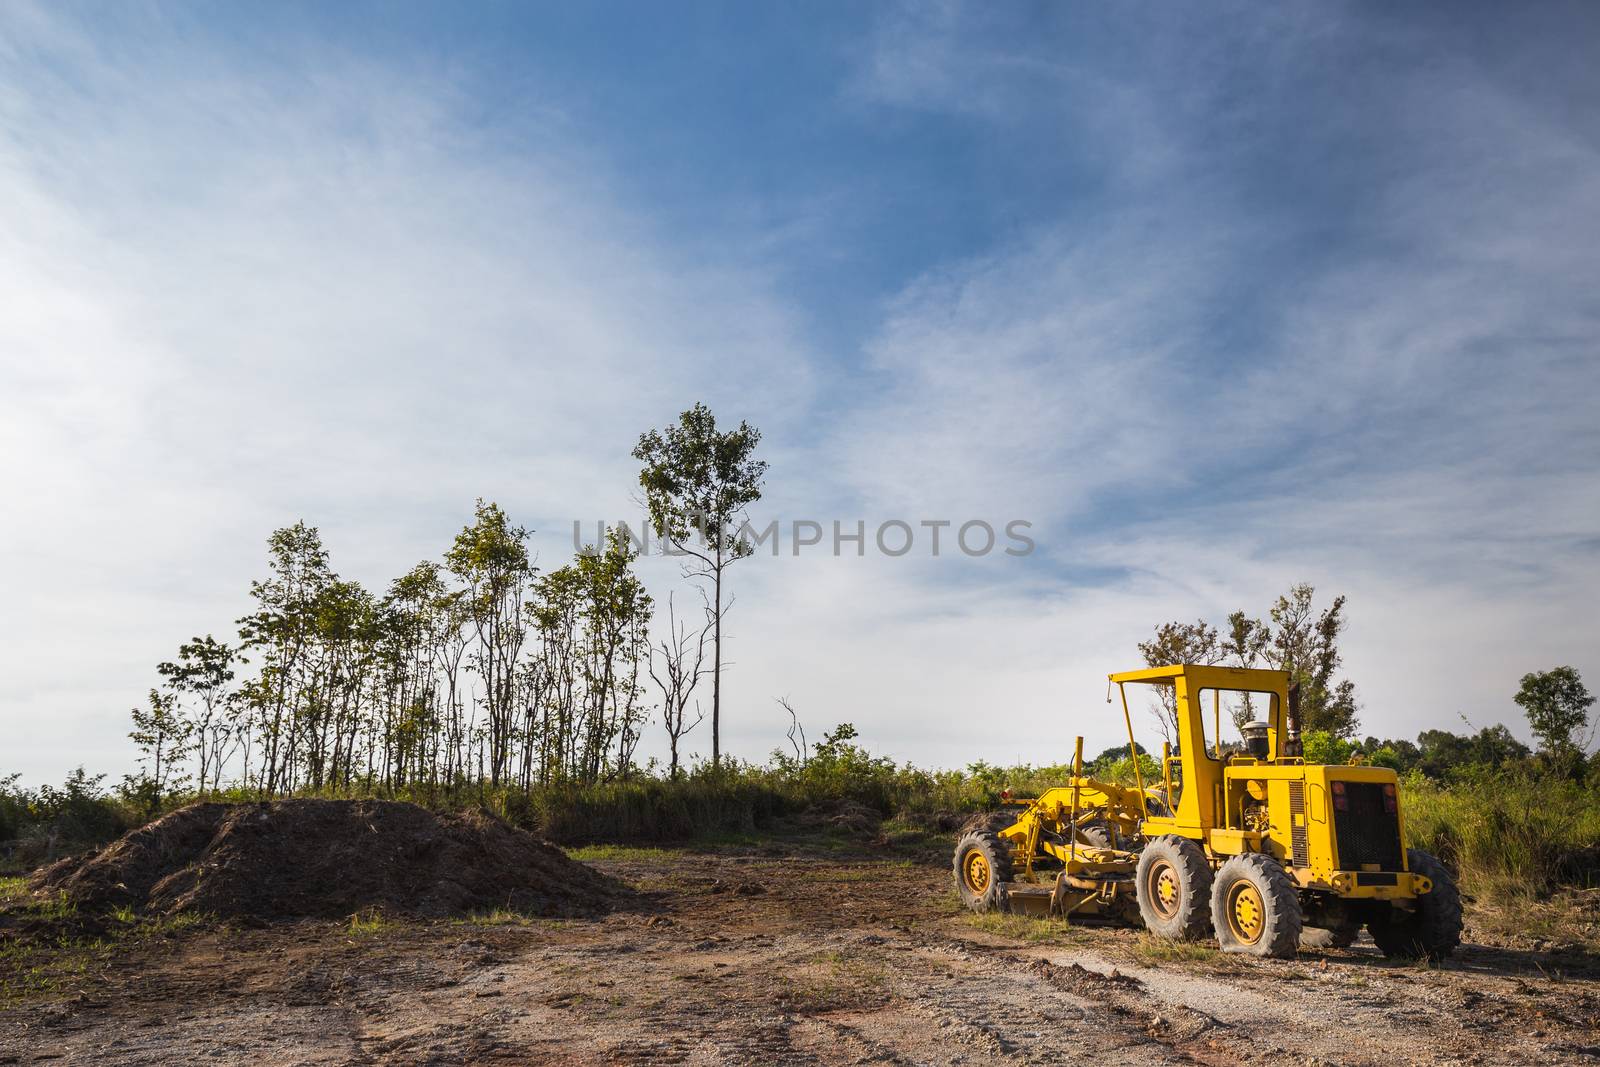 Wheel loader Excavator in the field with clear bule sky by aotweerawit